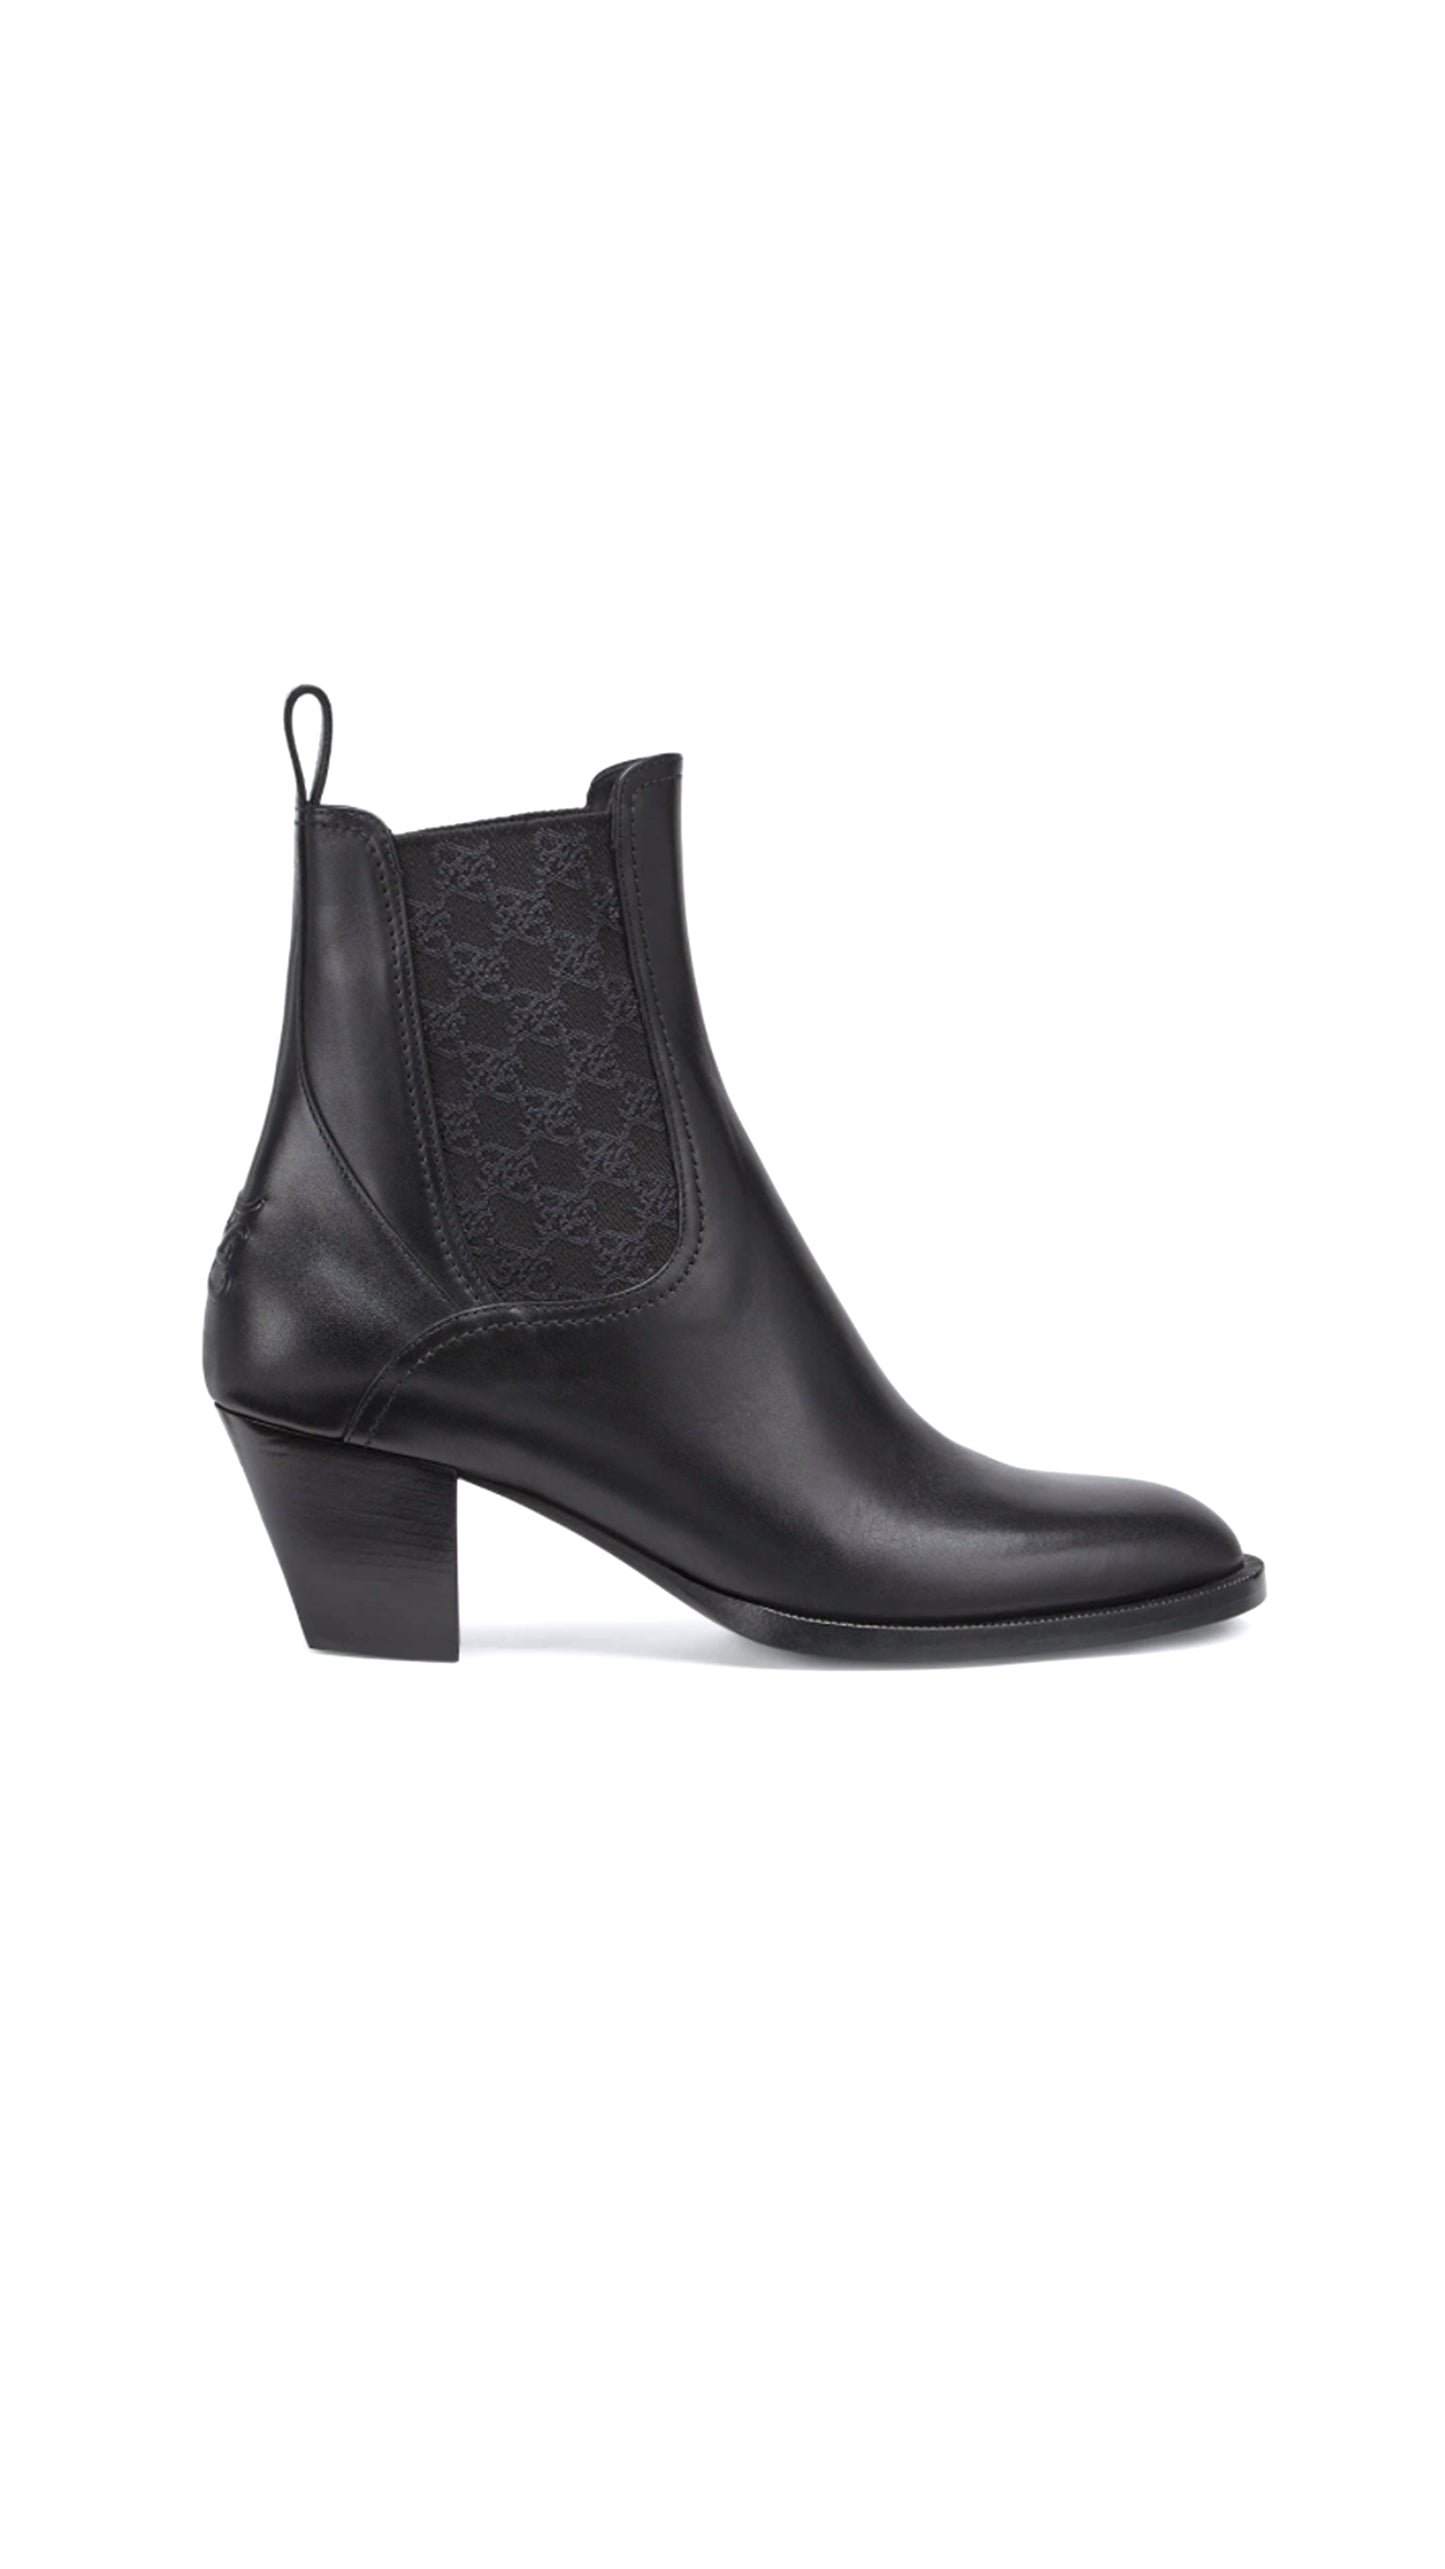 Black Leather Boots With Medium Heel 55MM - Black